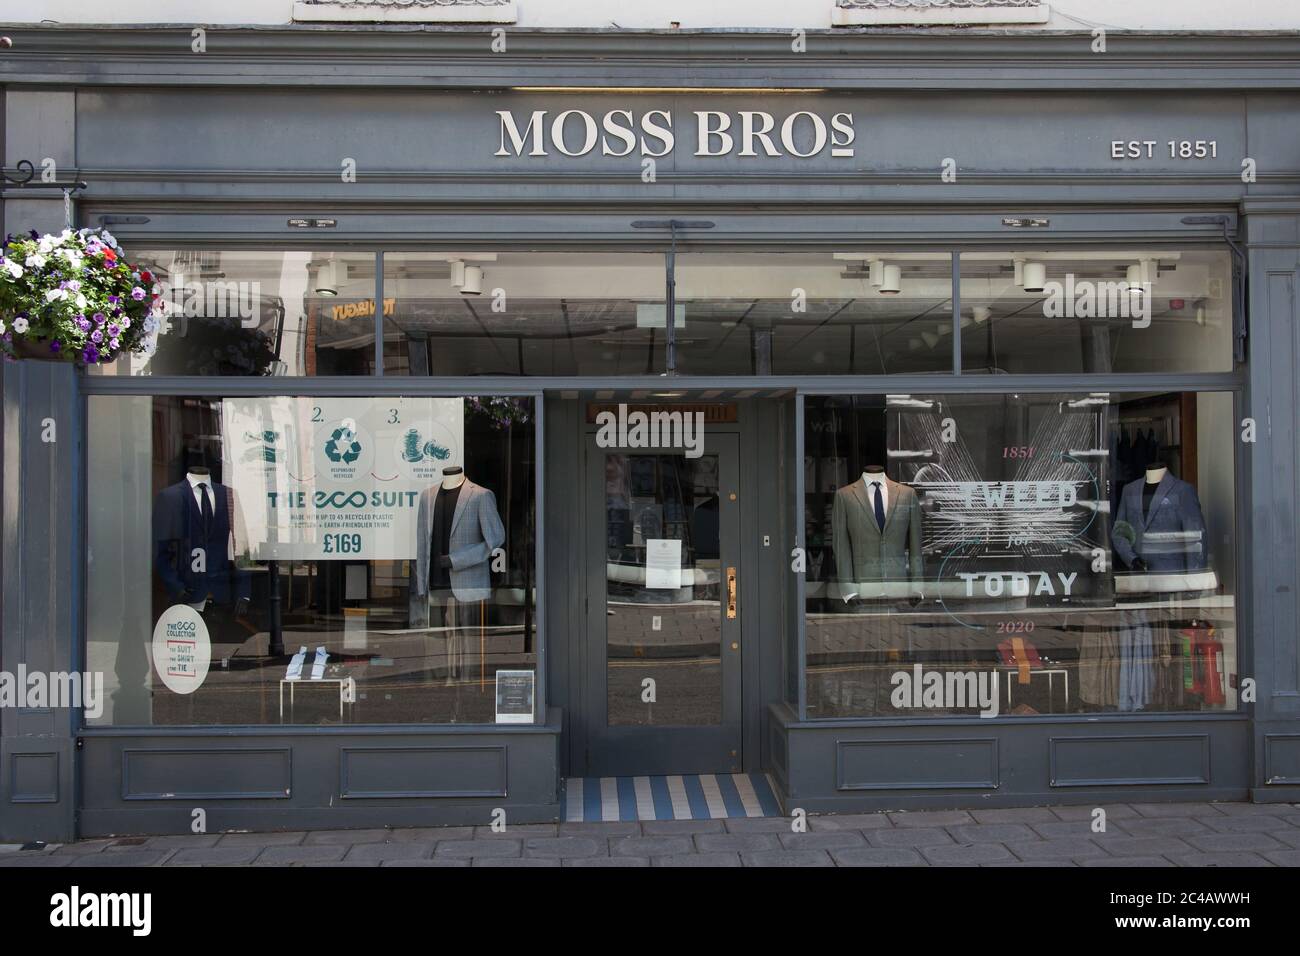 The Moss Bros menswear retailers in Cheltenham, Gloucestershire in the UK Stock Photo